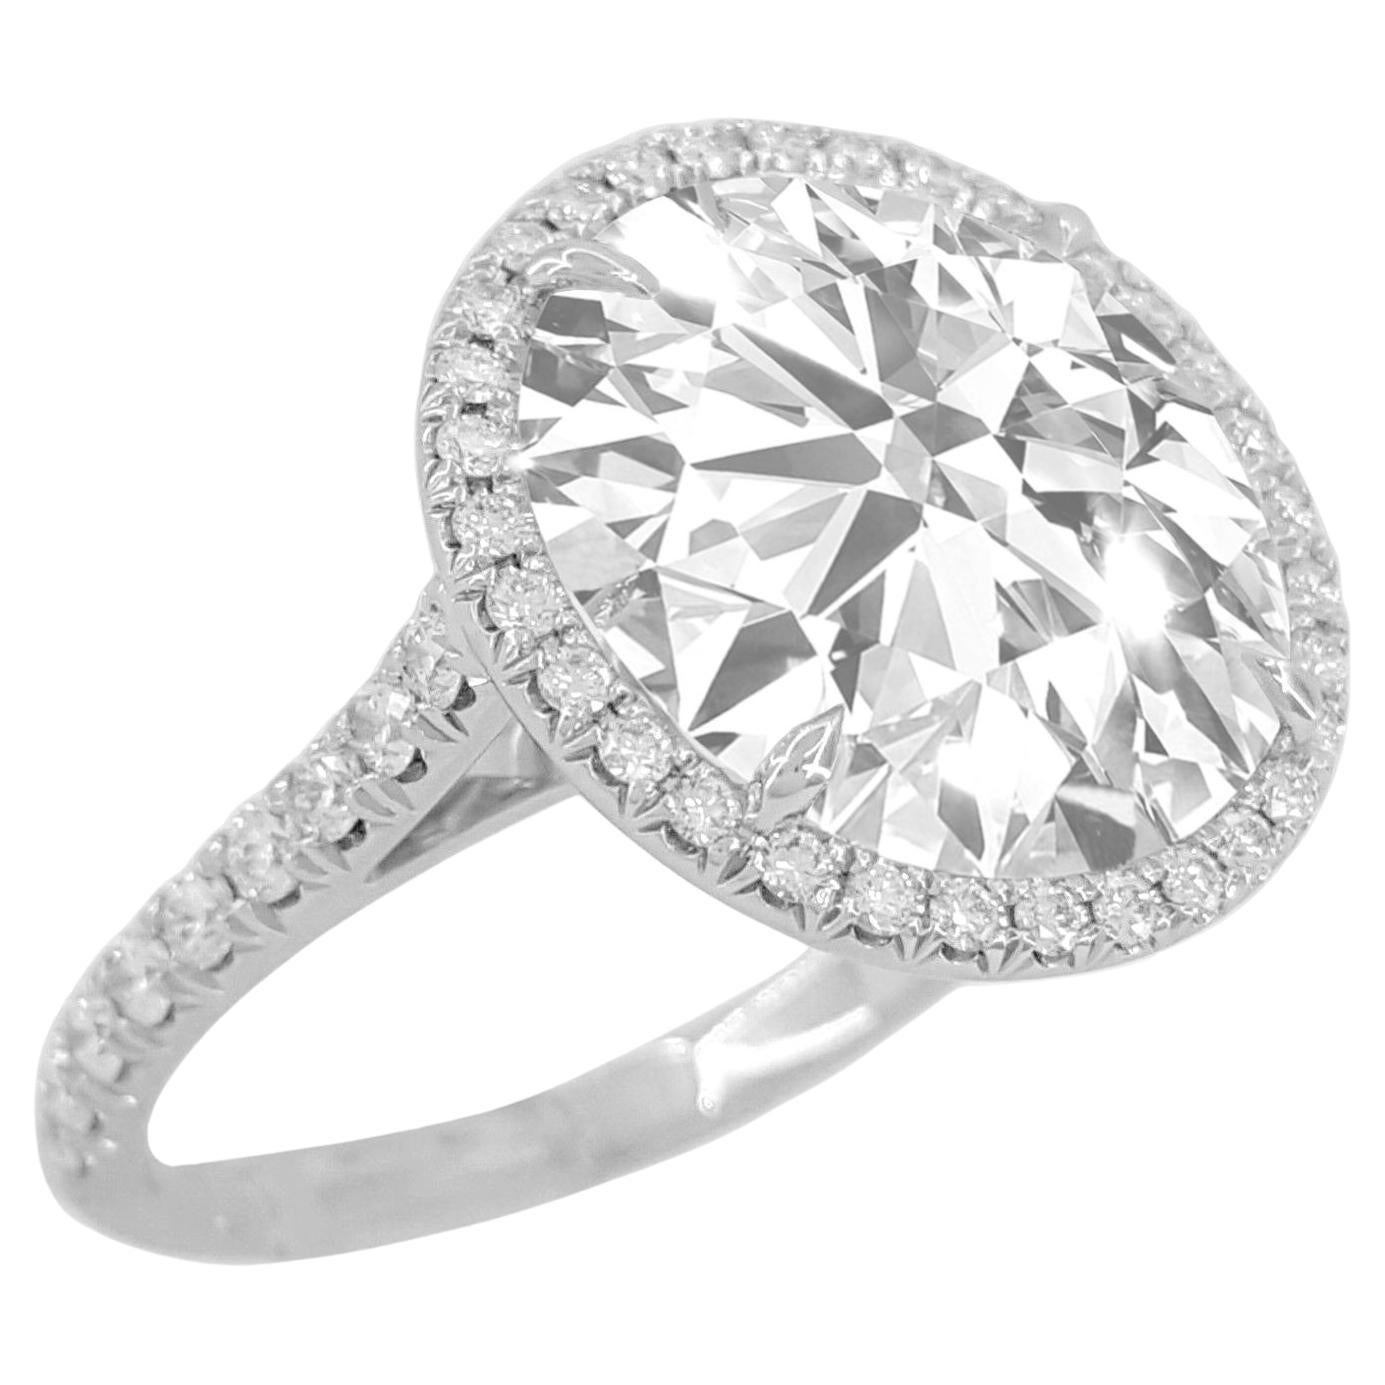 Tiffany & Co. 8 Carat Soleste Round Brilliant Cut Diamond Solitaire Ring